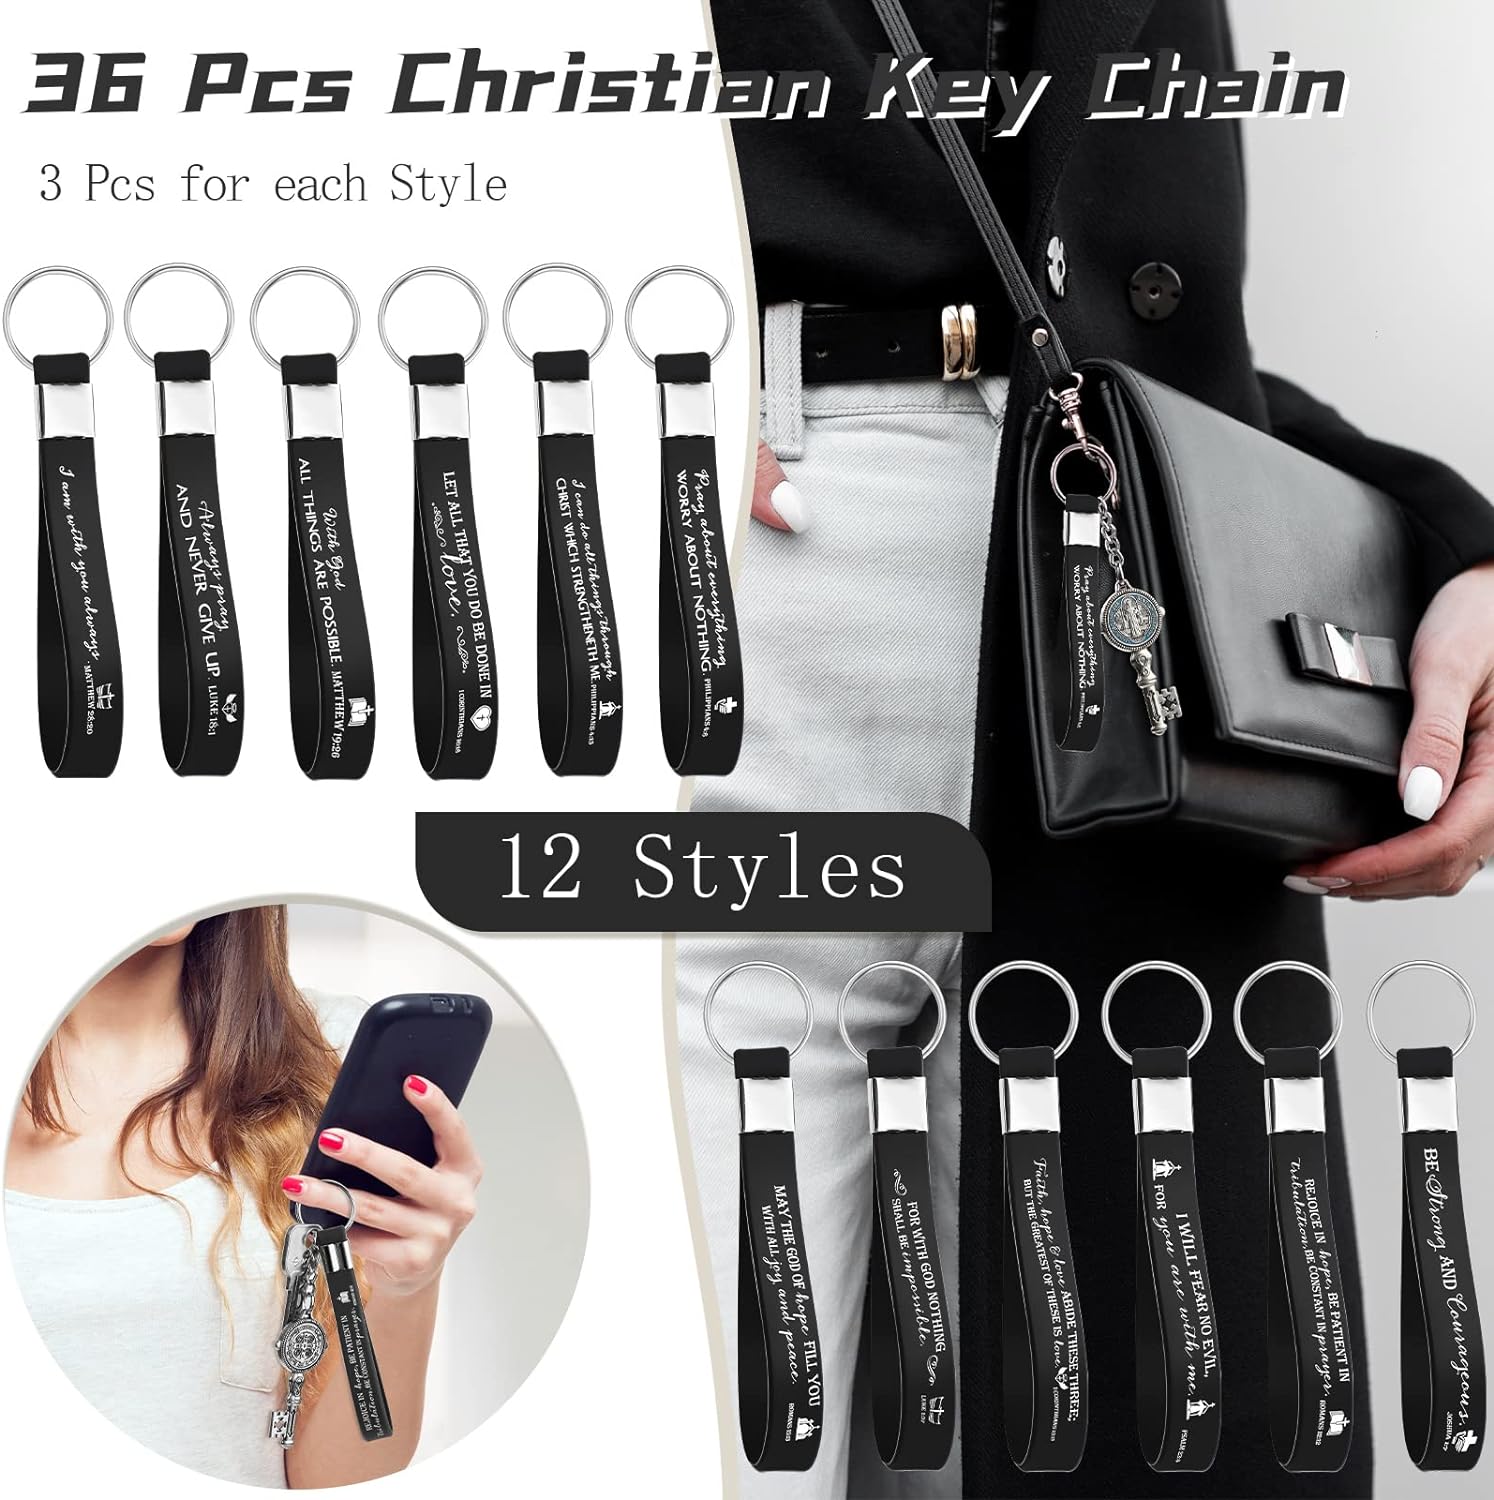 36 Pcs Bible Verse Christian Keychains claimedbygoddesigns